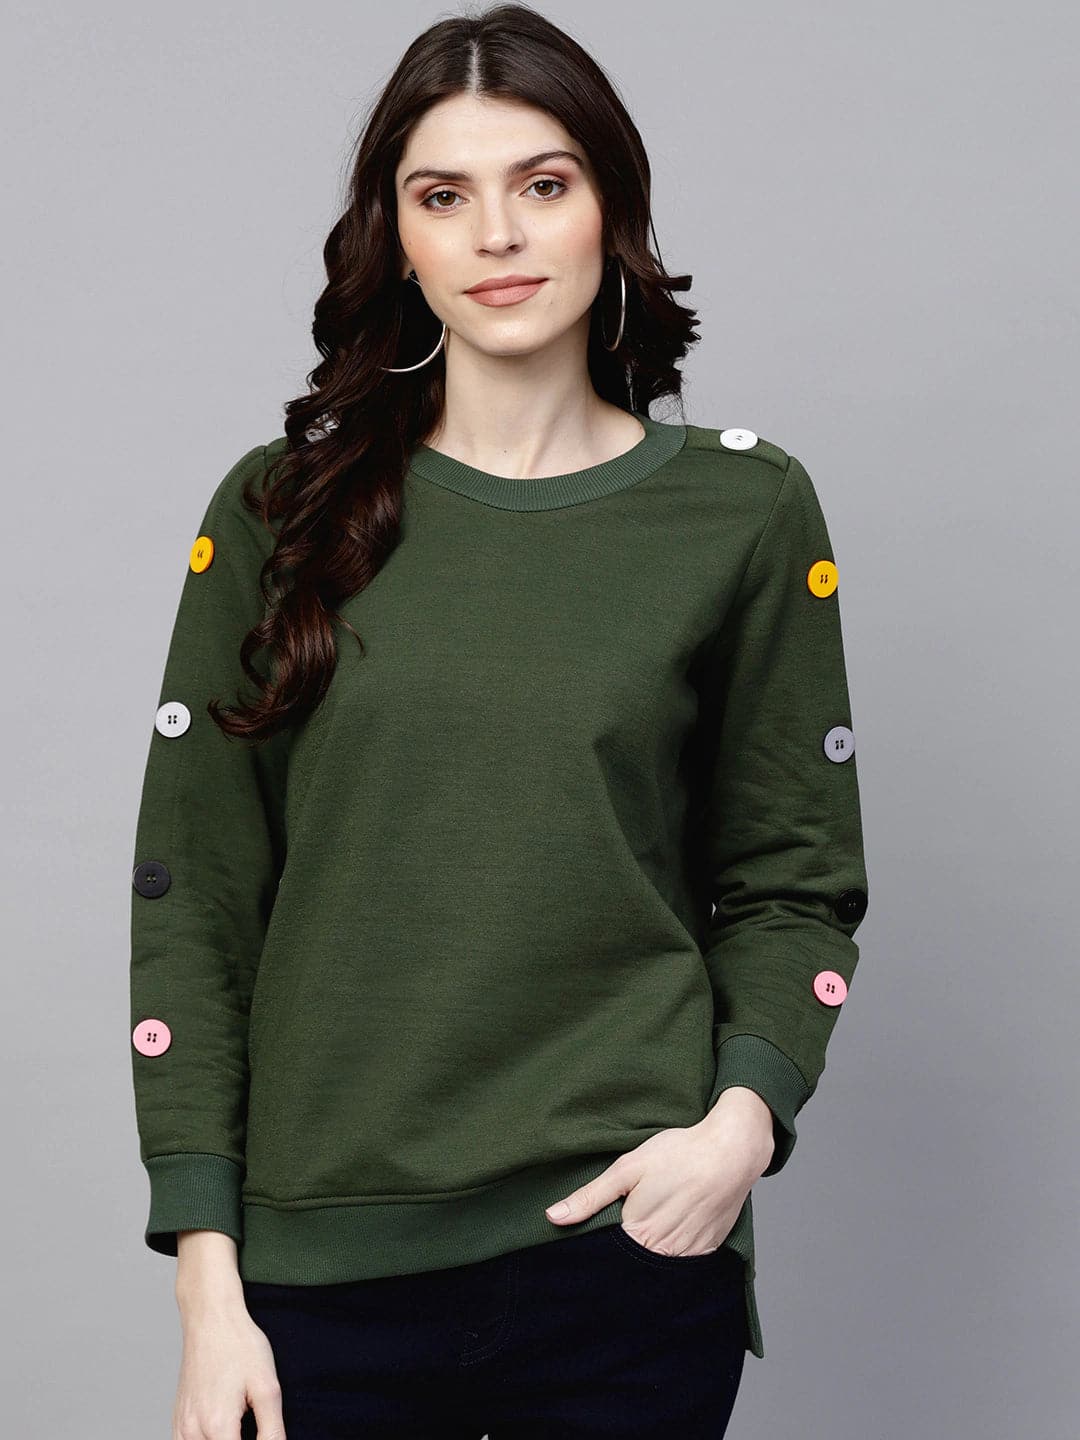 Olive Sweatshirt With Colored Buttons-Sweatshirts-SASSAFRAS